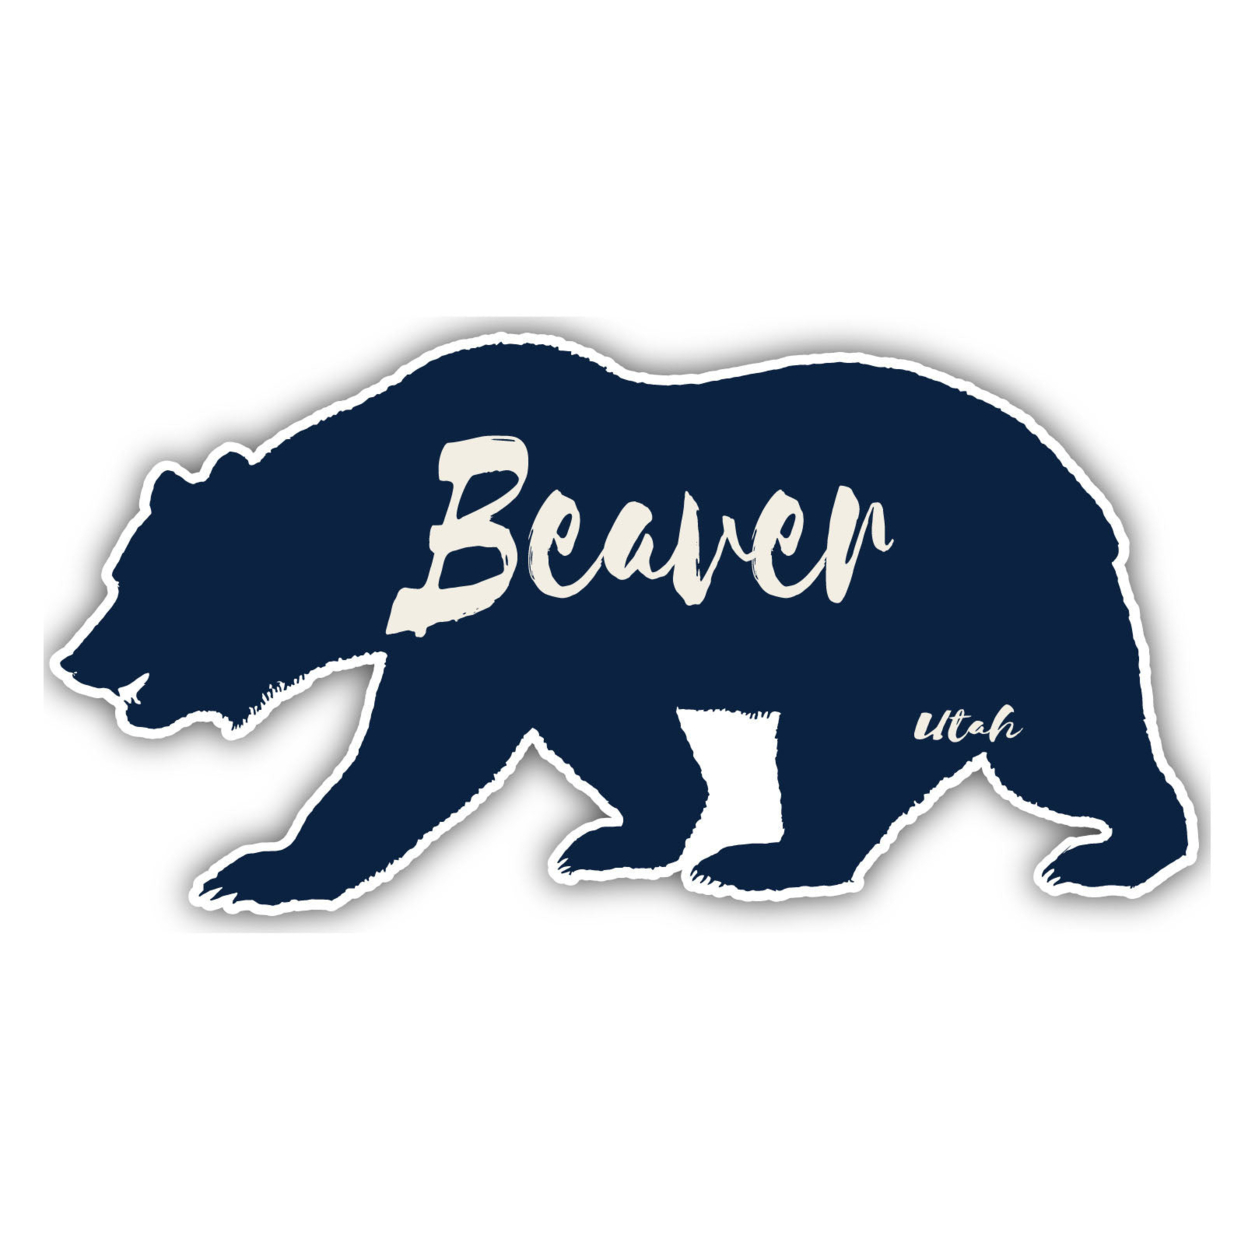 Beaver Utah Souvenir Decorative Stickers (Choose Theme And Size) - Single Unit, 8-Inch, Tent